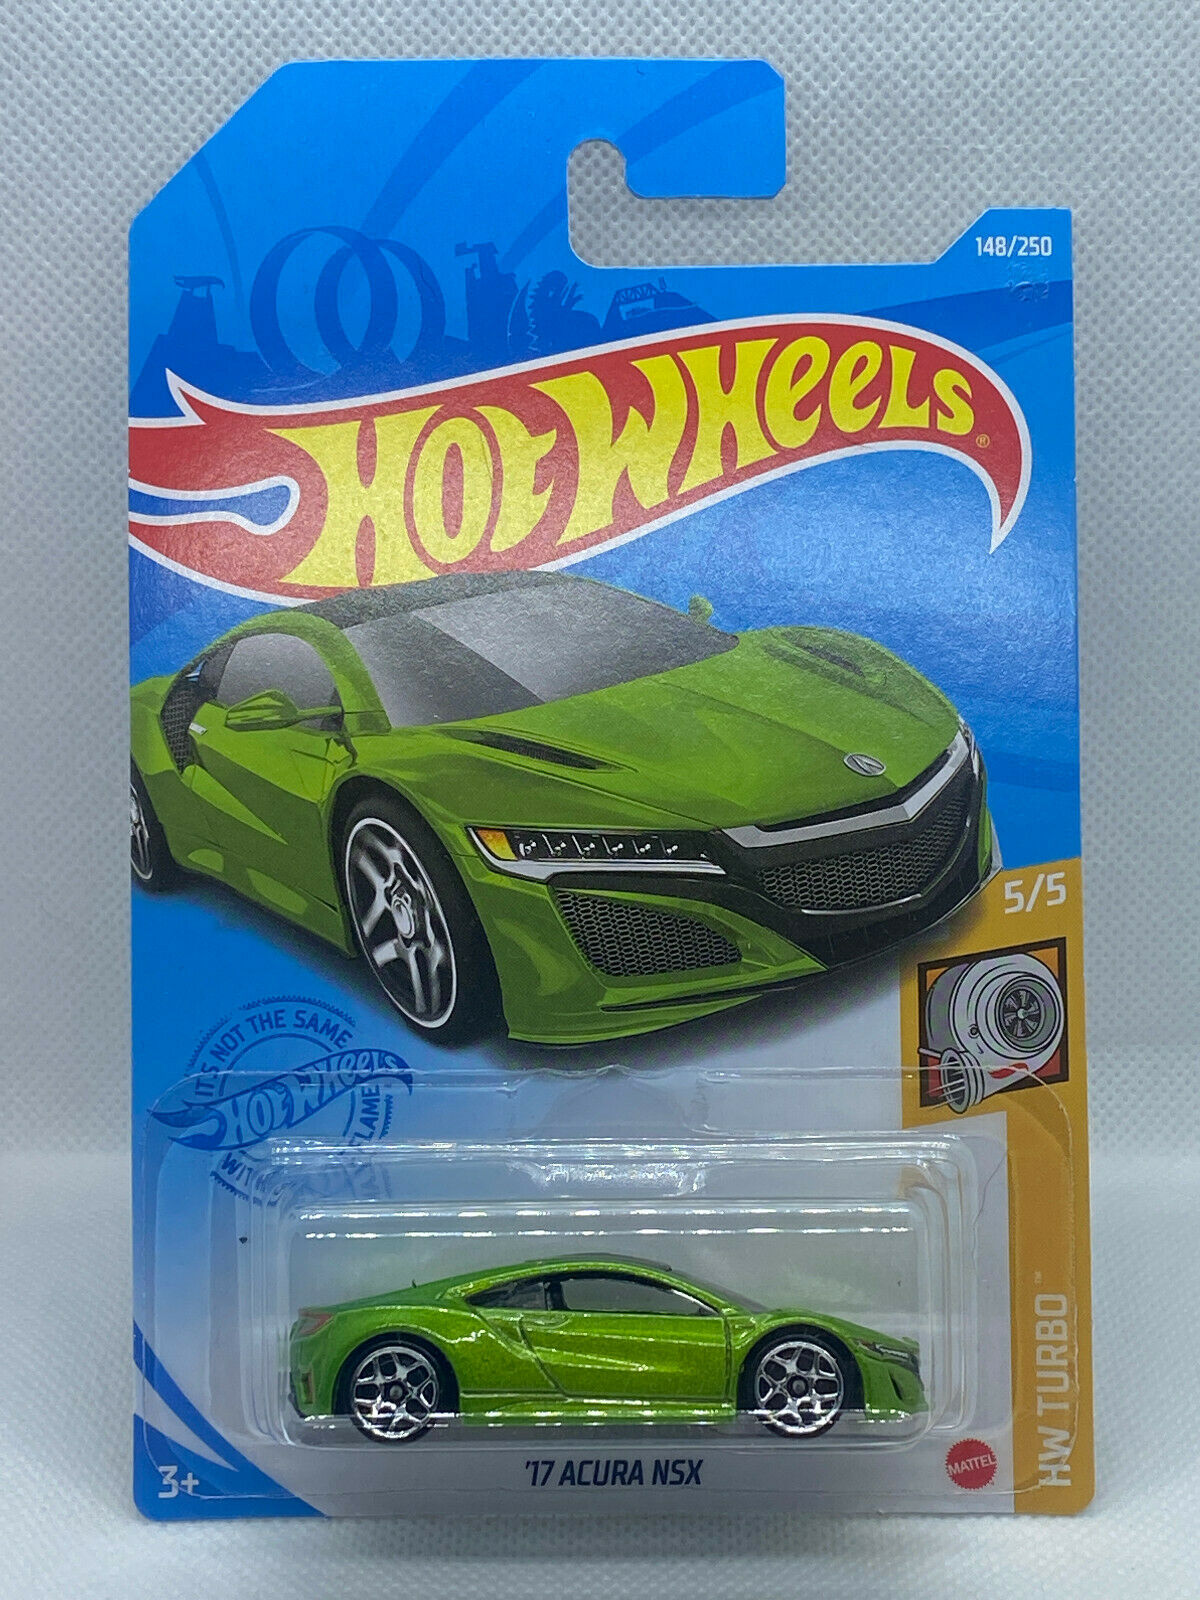 2021 Hot Wheels HW Turbo #5/5 Acura NSX Green #148/250 NIP